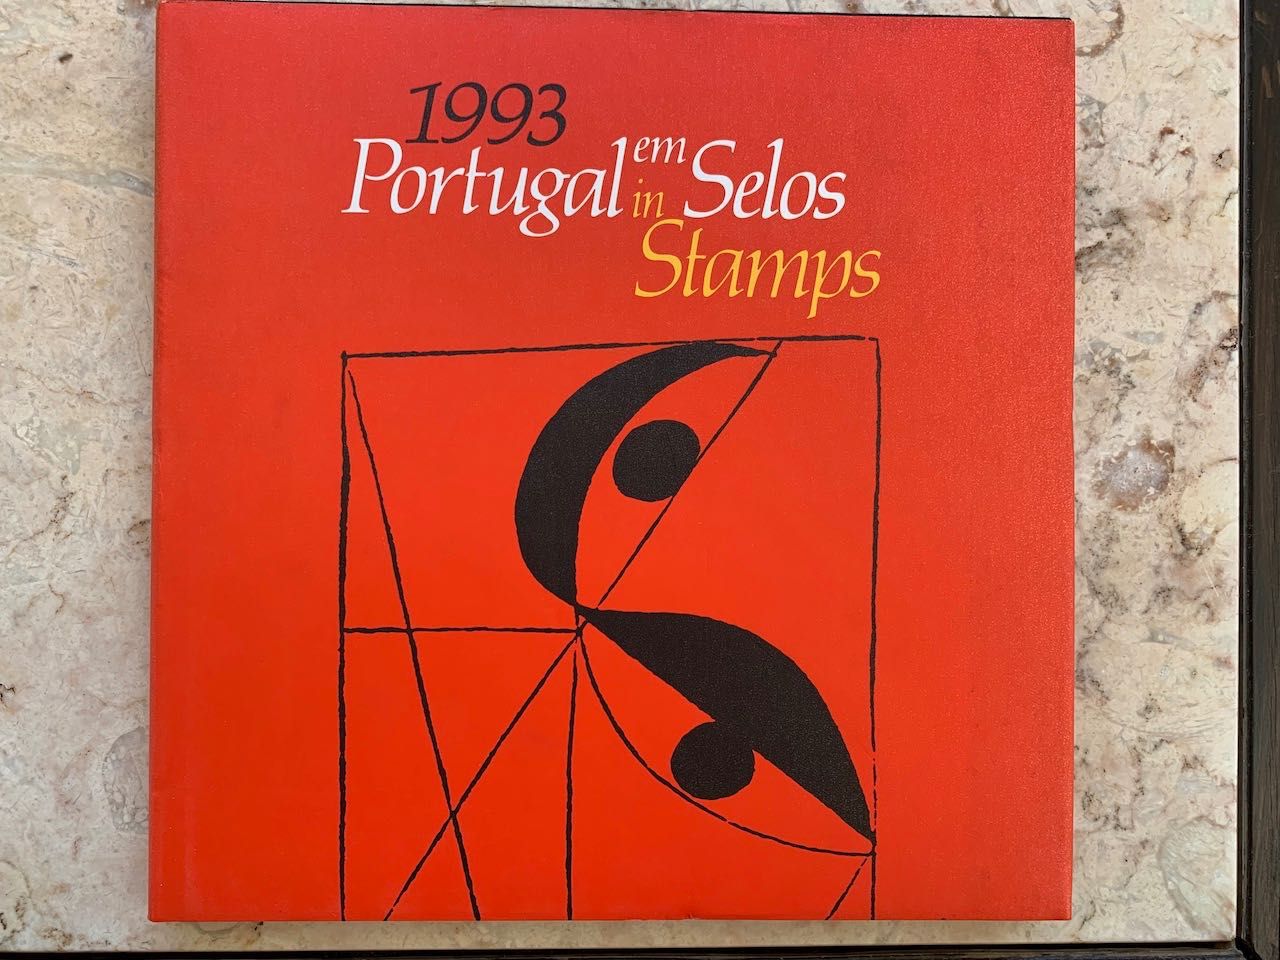 Portugal em selos 1993